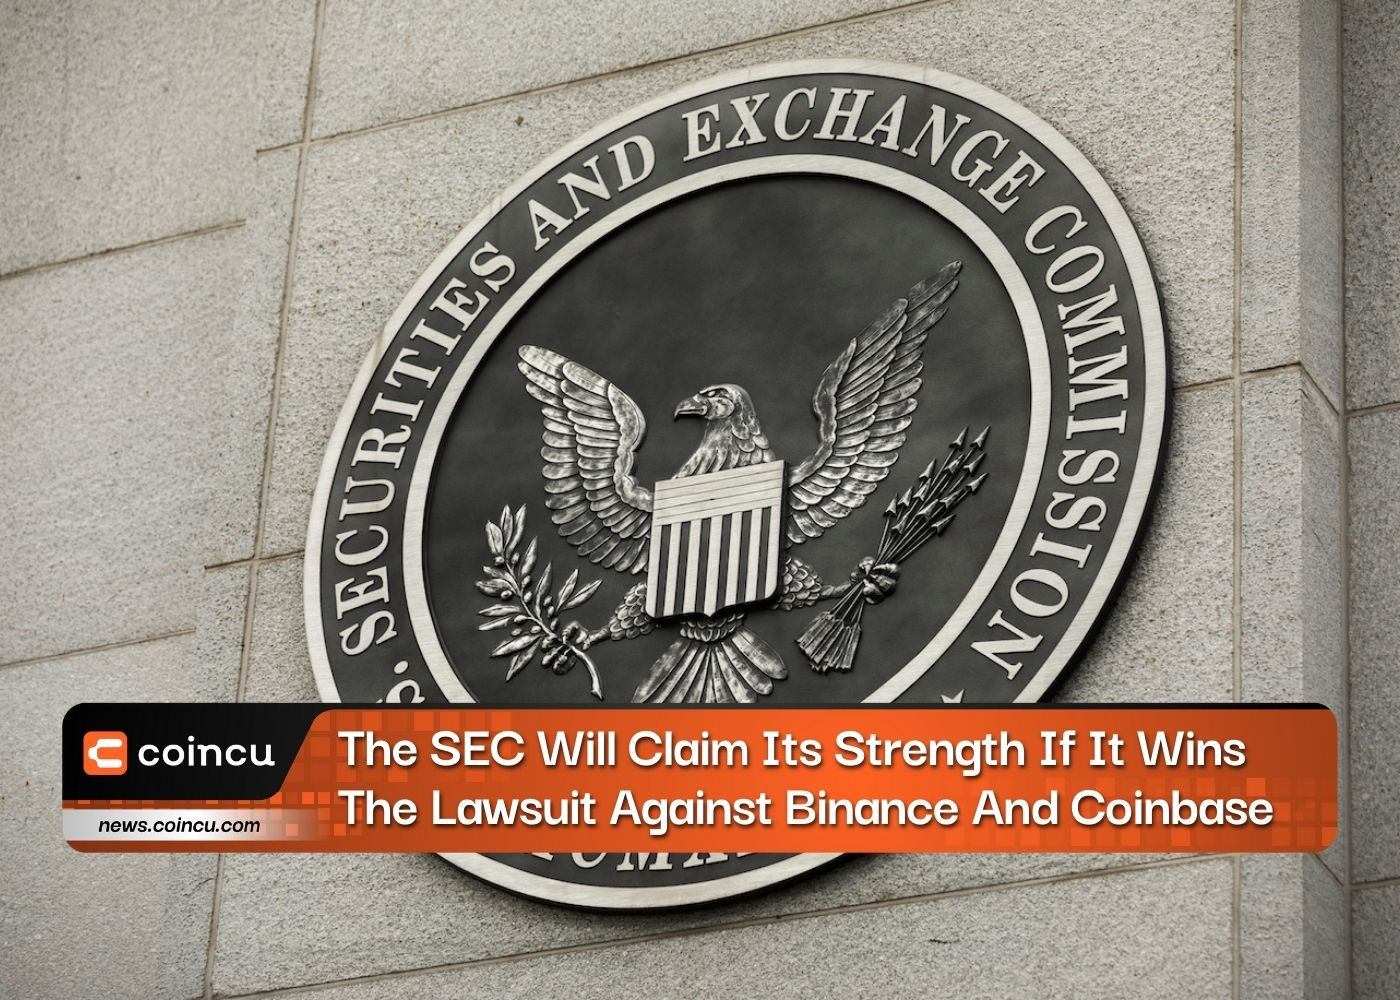 SEC در صورت برنده شدن در دعوای حقوقی علیه Binance و Coinbase قدرت خود را ادعا می کند